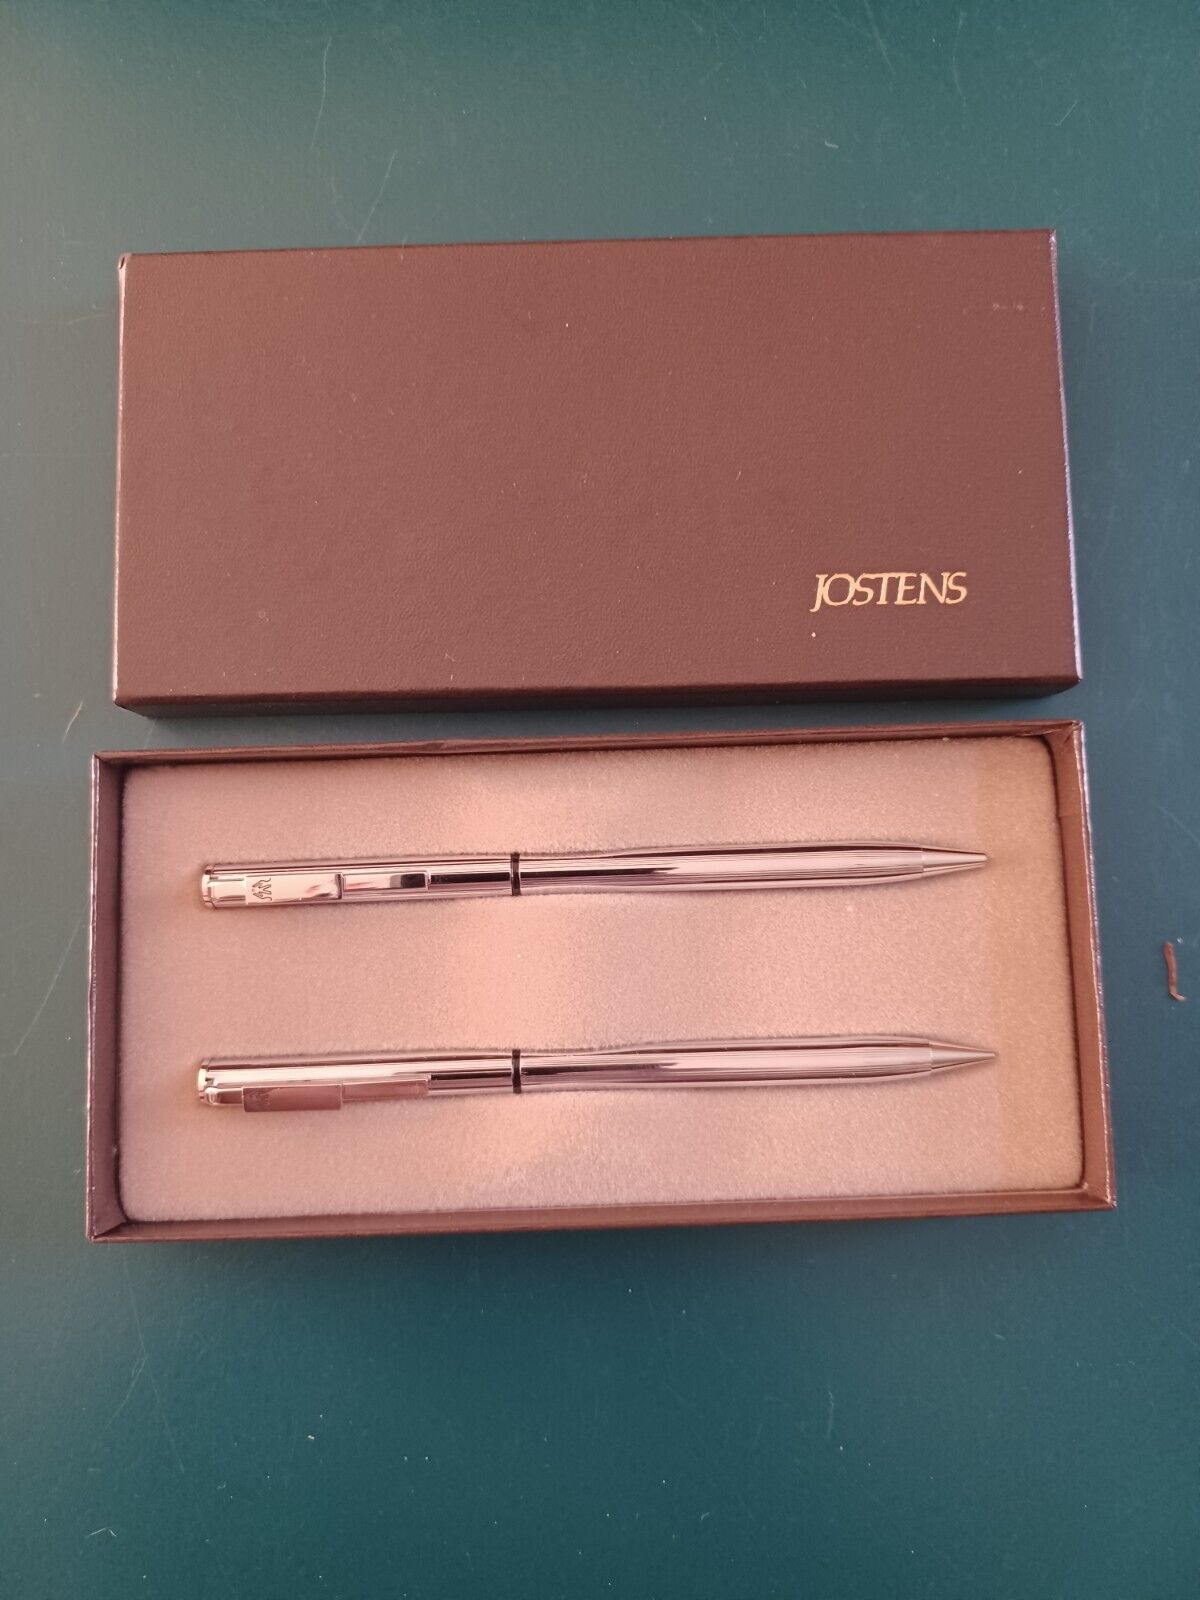 Vintage Jostens Writing Pen Pencil Set. Silver